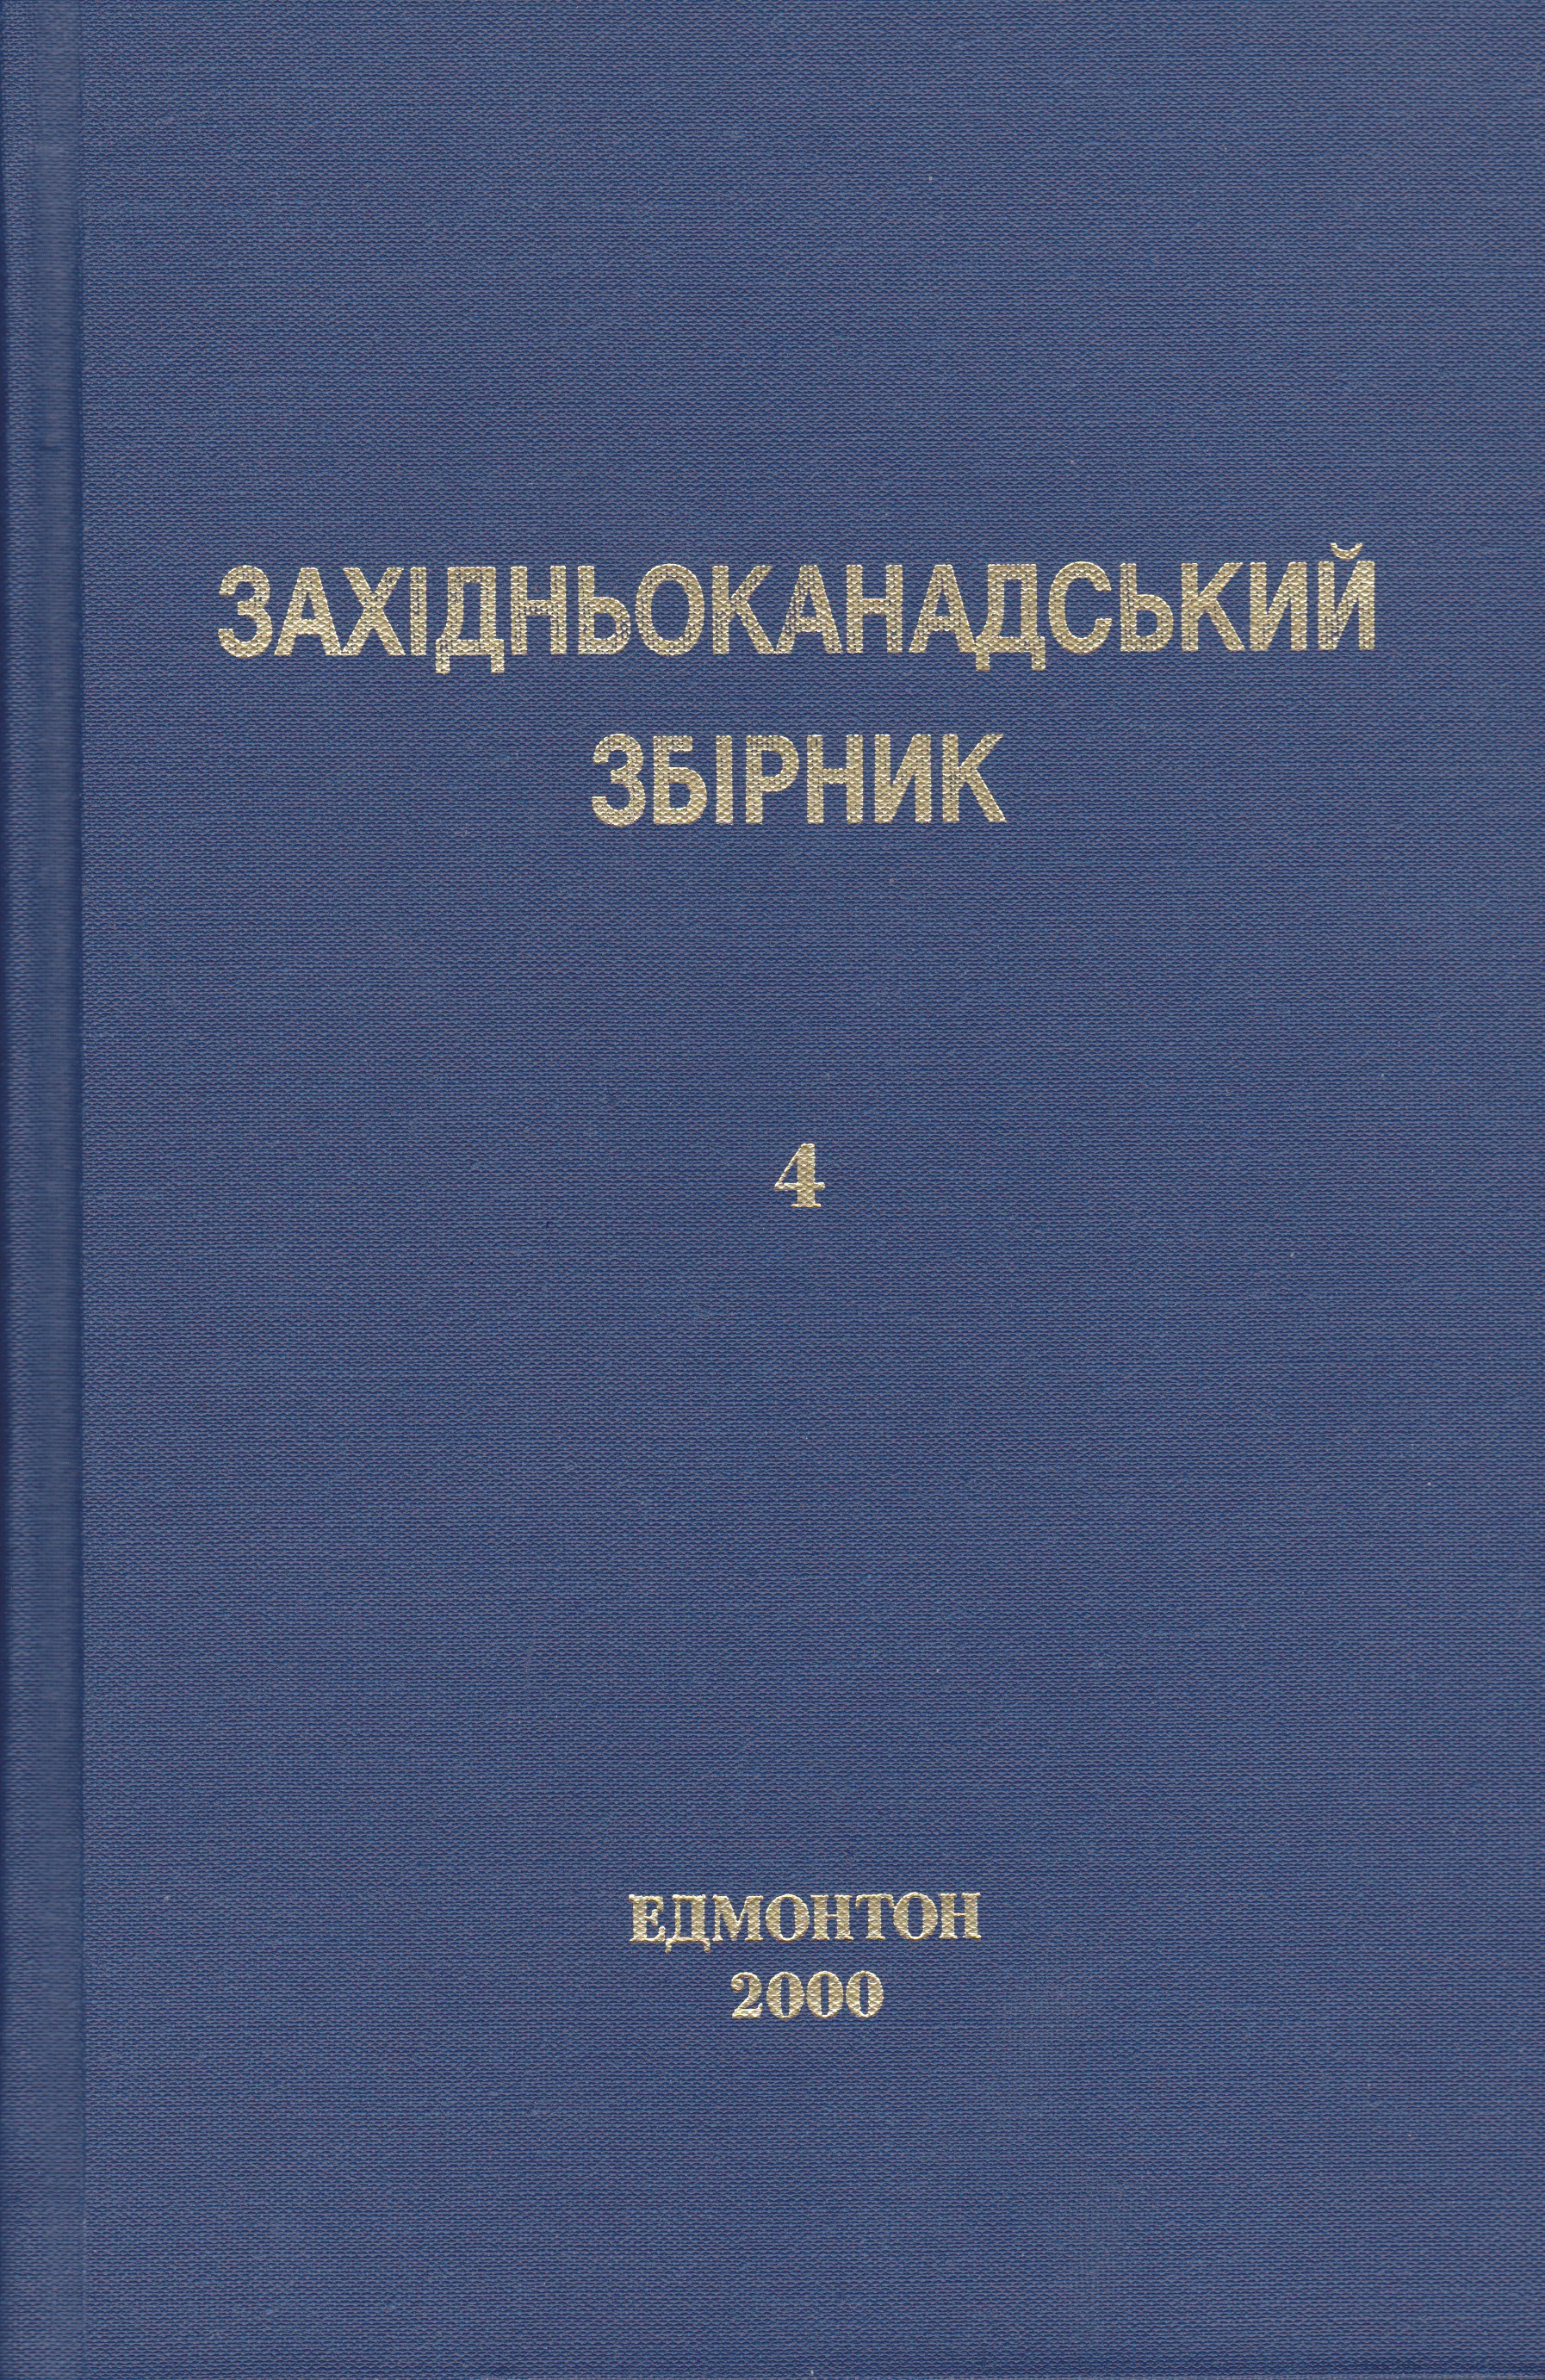 zbirnyk-4-cover